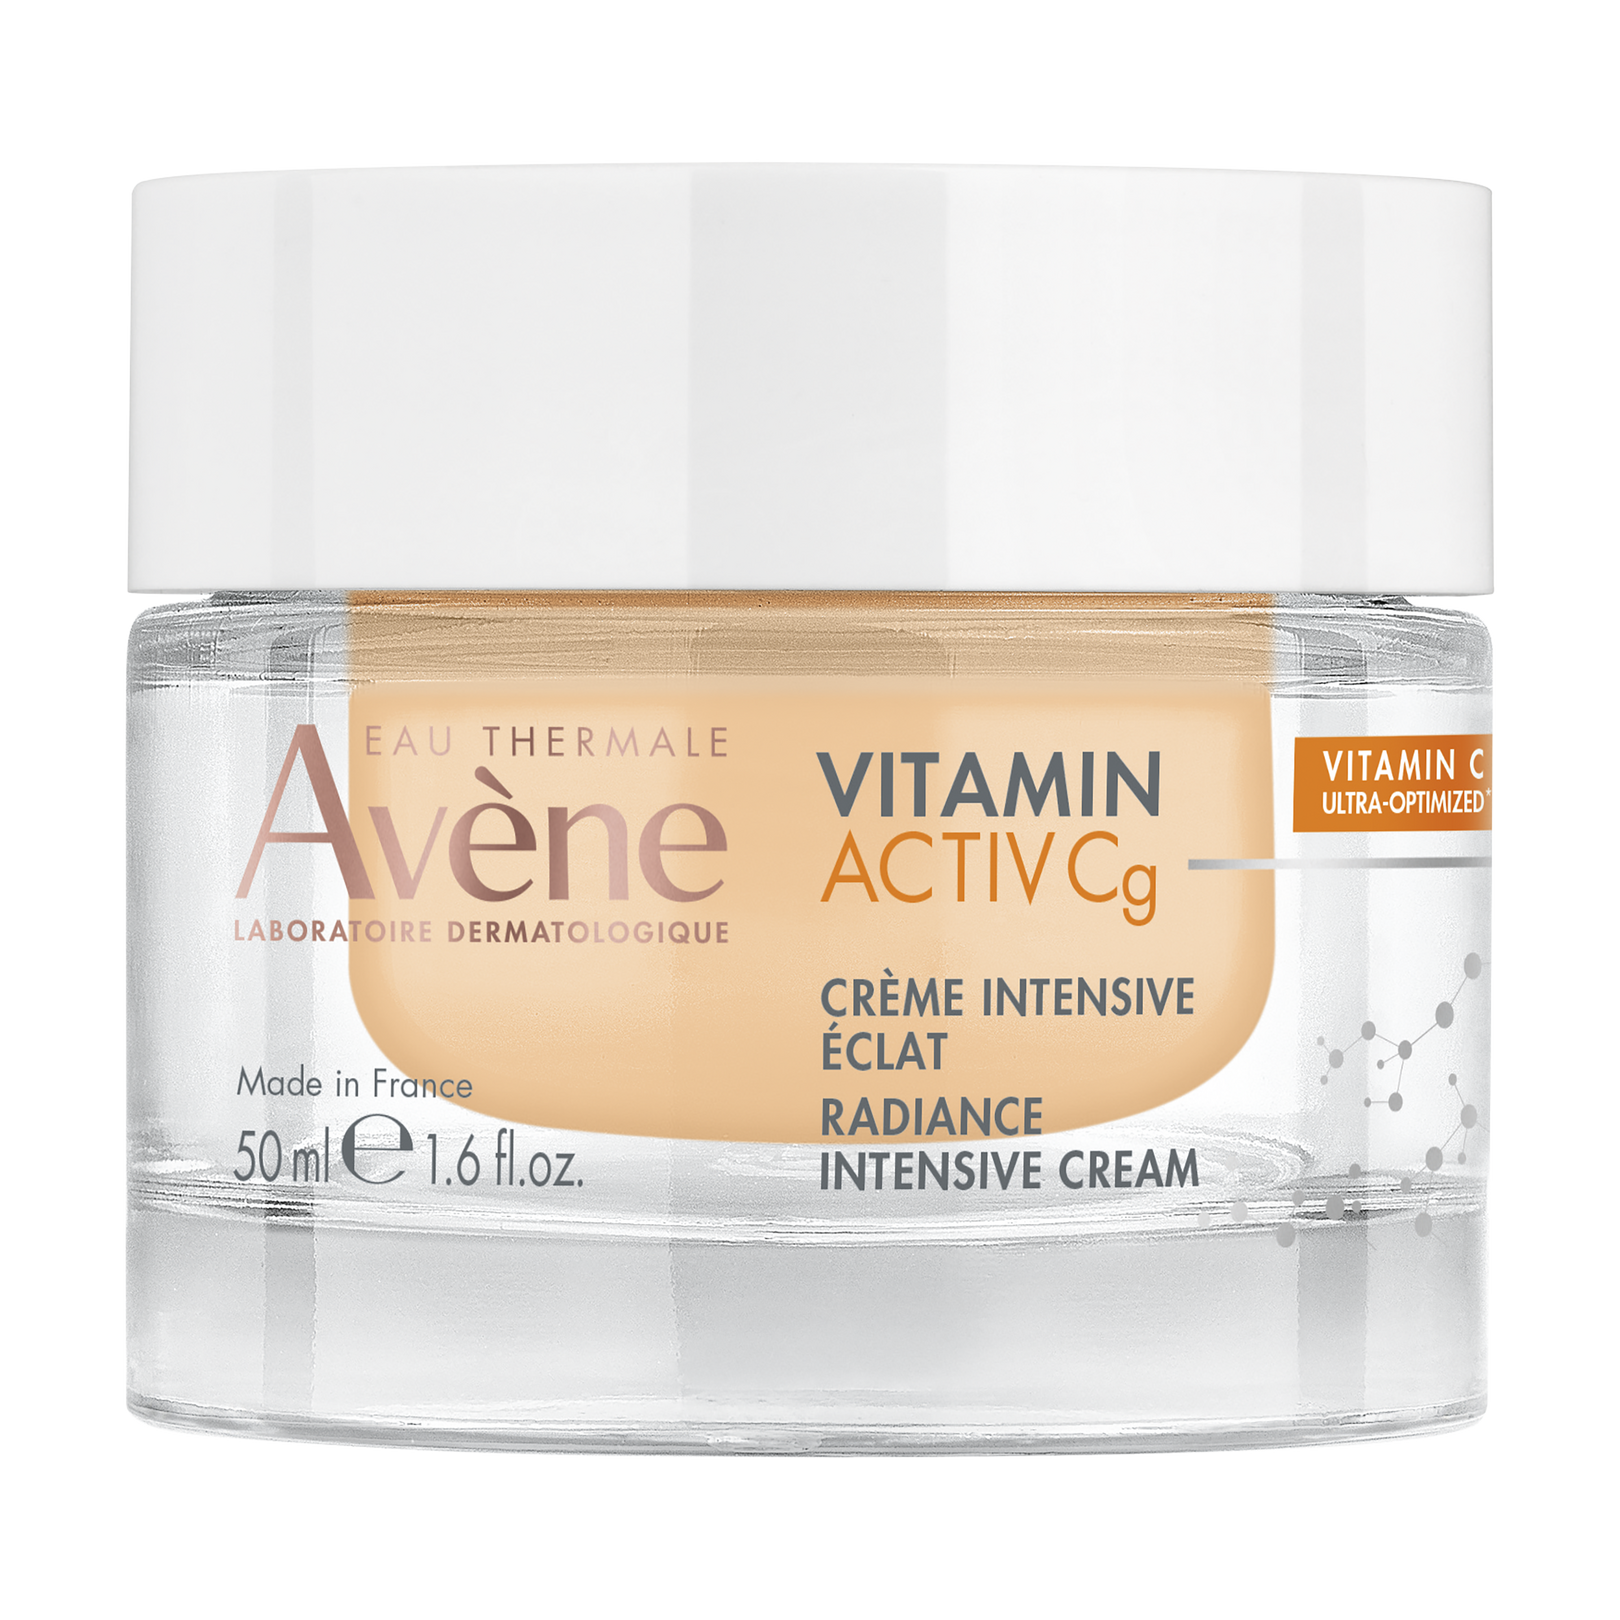 Vitamin Activ Cg Radiance intensive cream